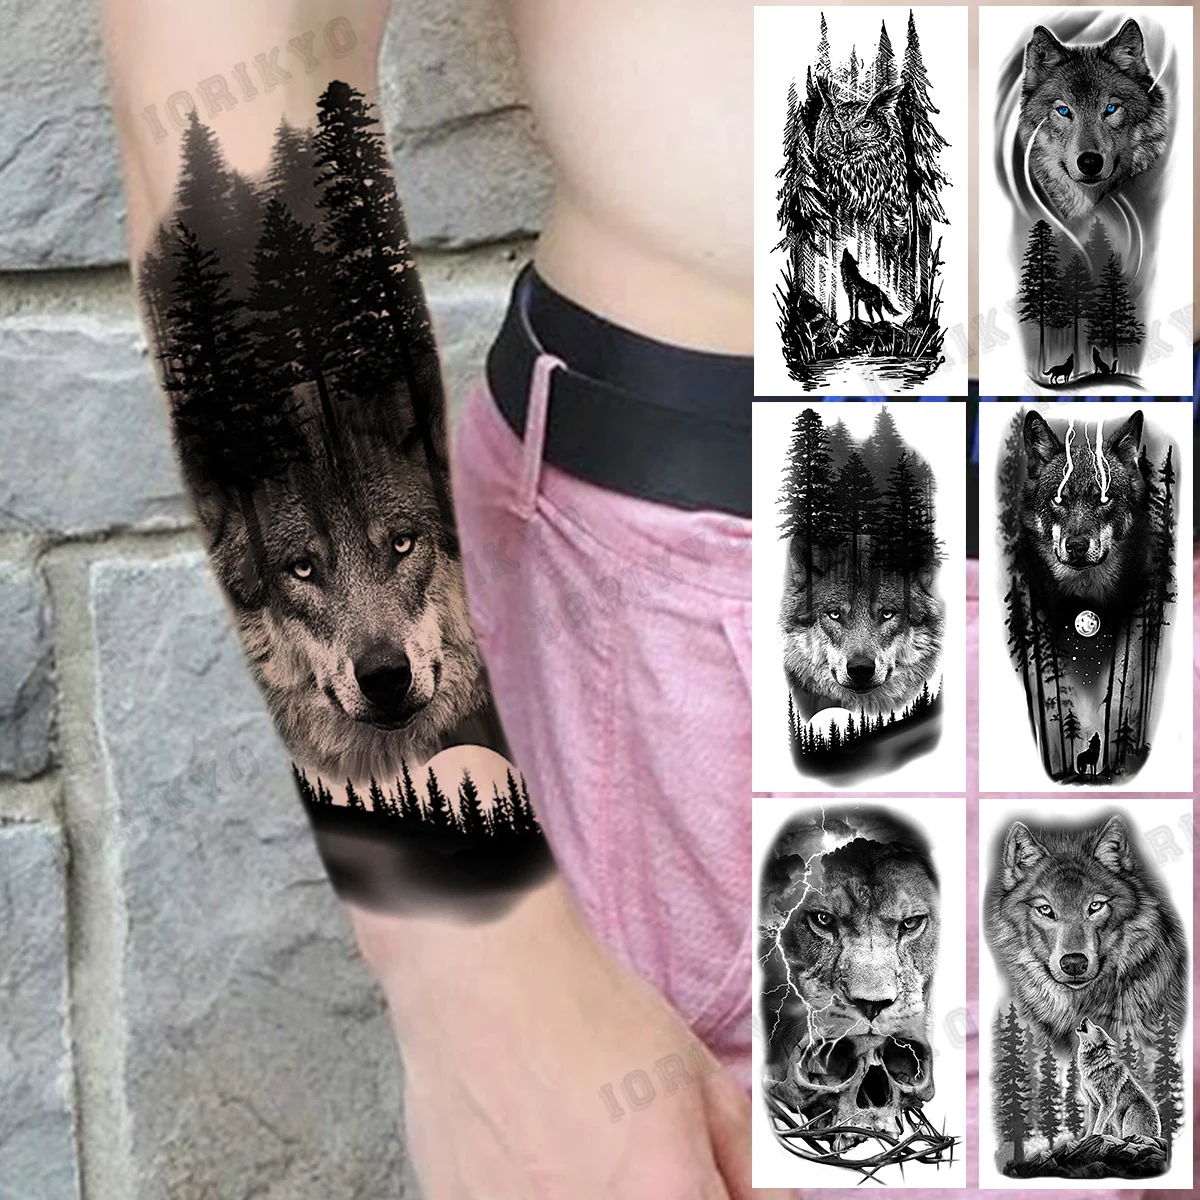 Realno Gozdni Volk Podlakti Začasne Tetovaže Za Moške Odrasle Lev Lobanje Trnje Sova Ponaredek Tatoo Body Art Slikarstvo Tatoos Nalepka